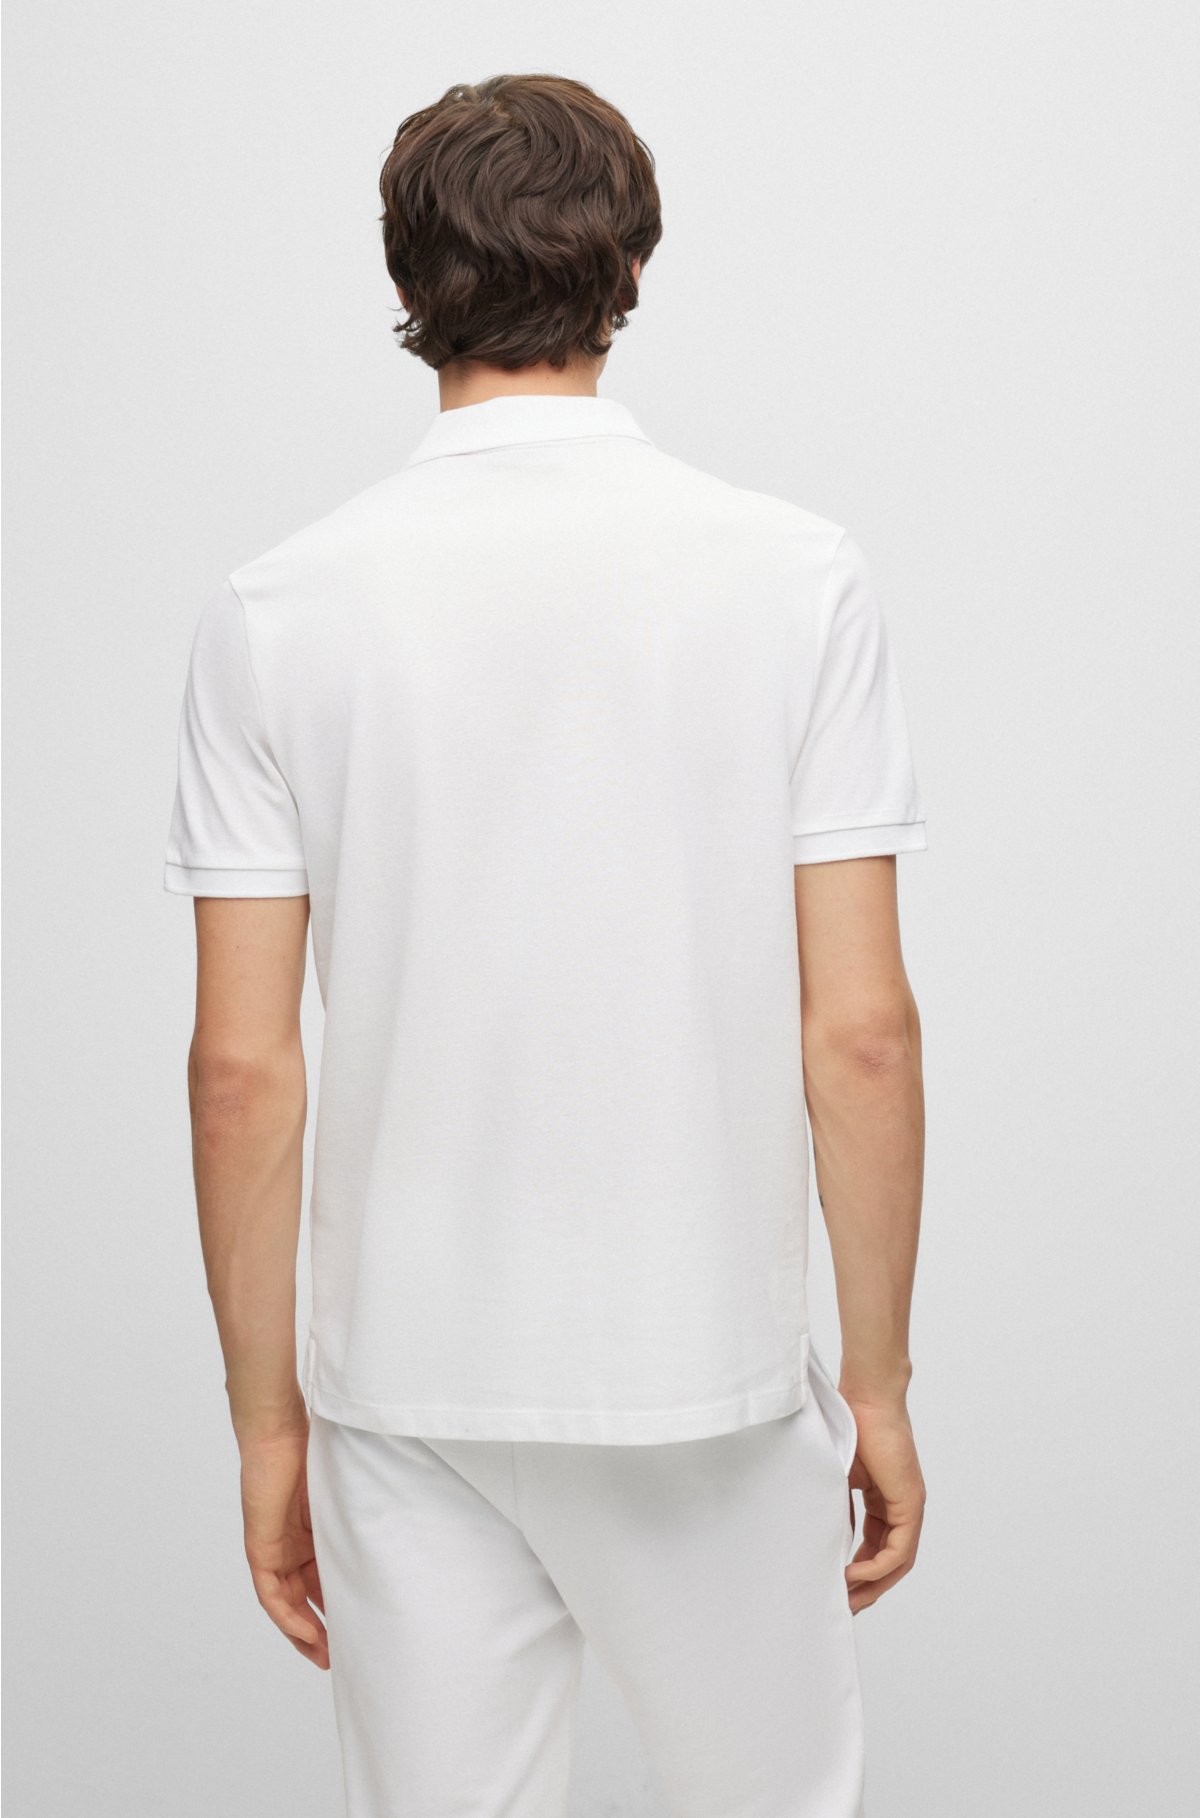 BOSS - Cotton-piqué polo shirt with embroidered logo